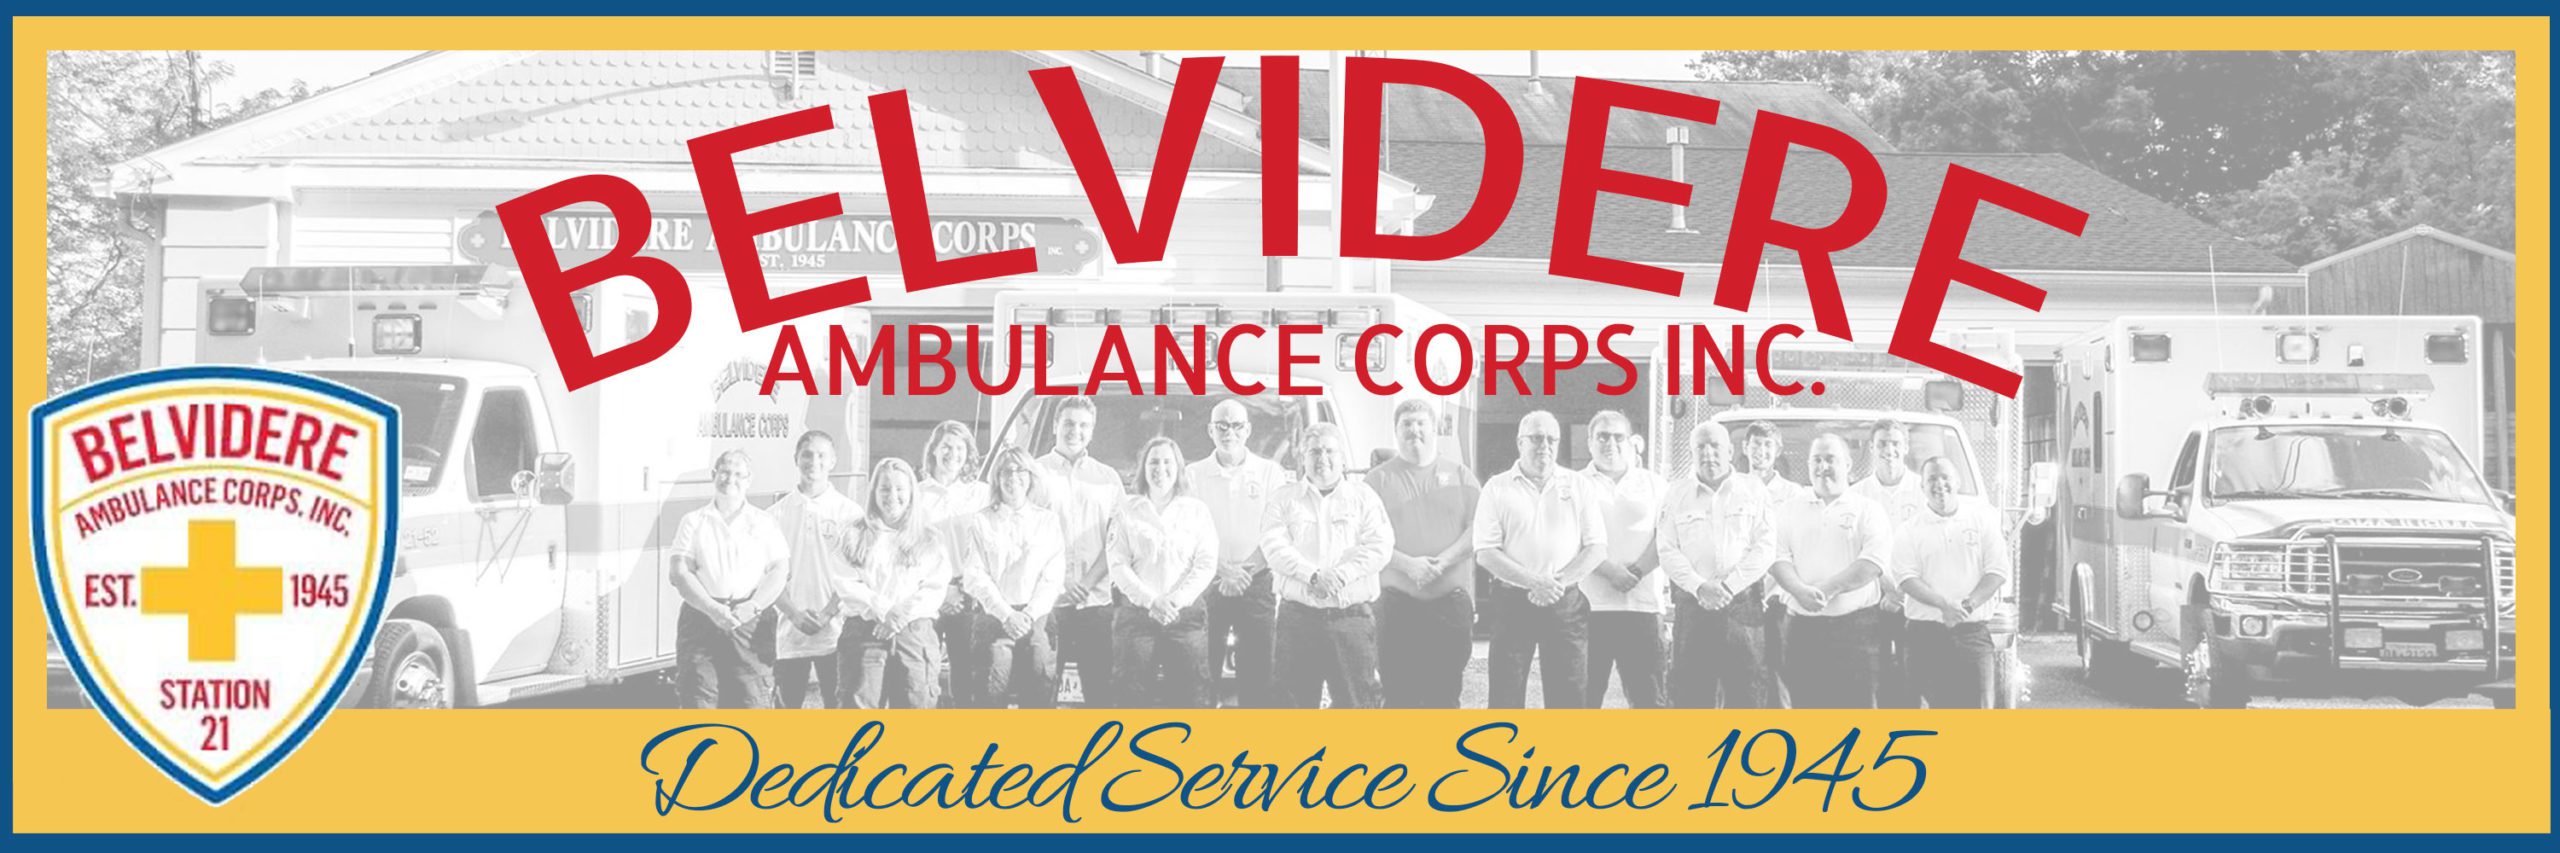 Belvidere Ambulance Corps